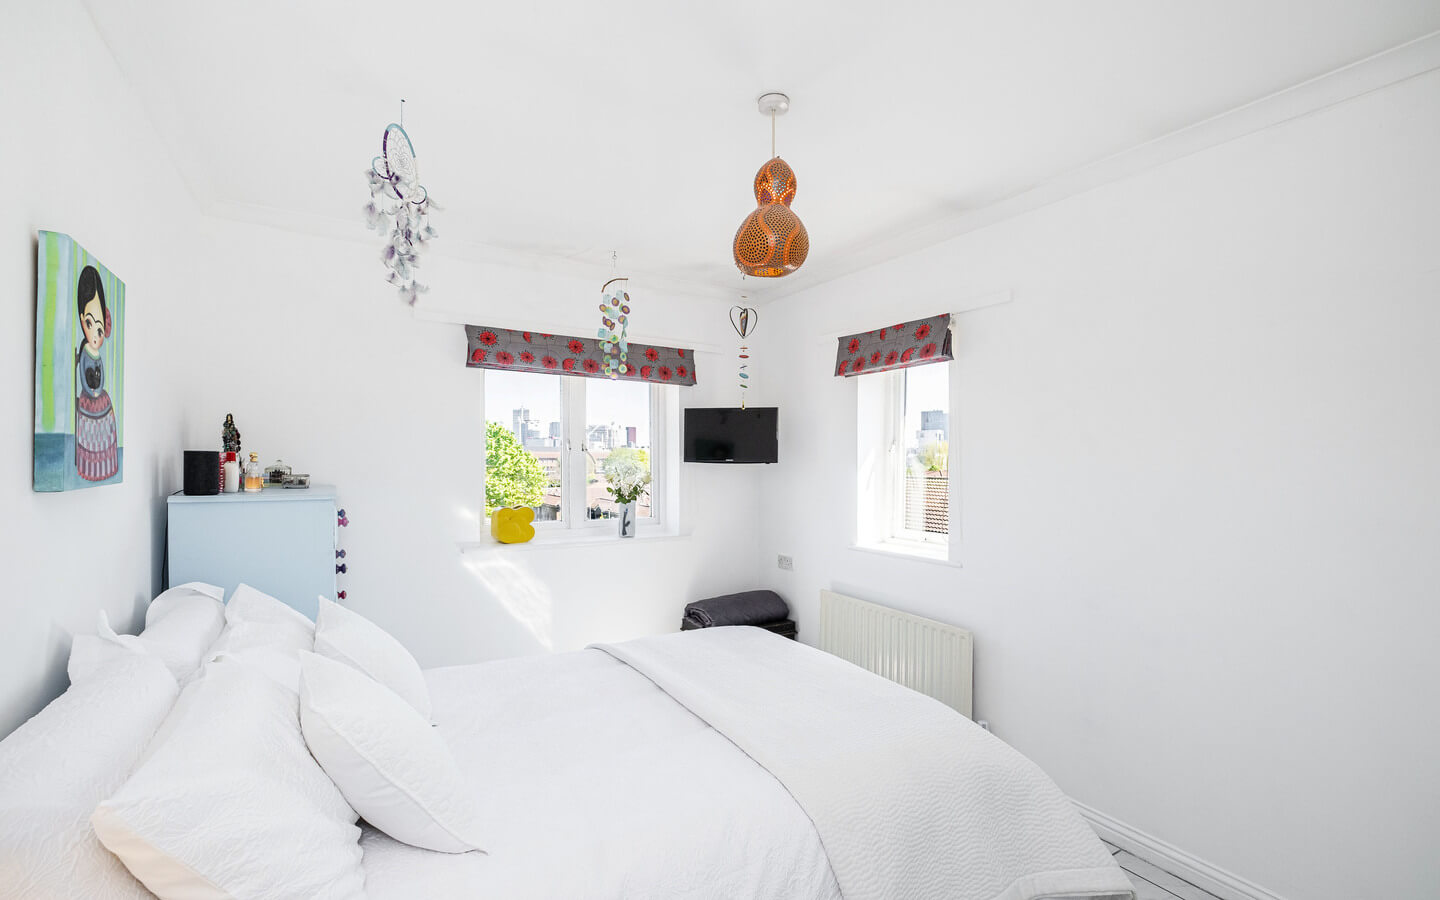 1 Bedroom Flat For Sale - Hackney - London - E9 5HN